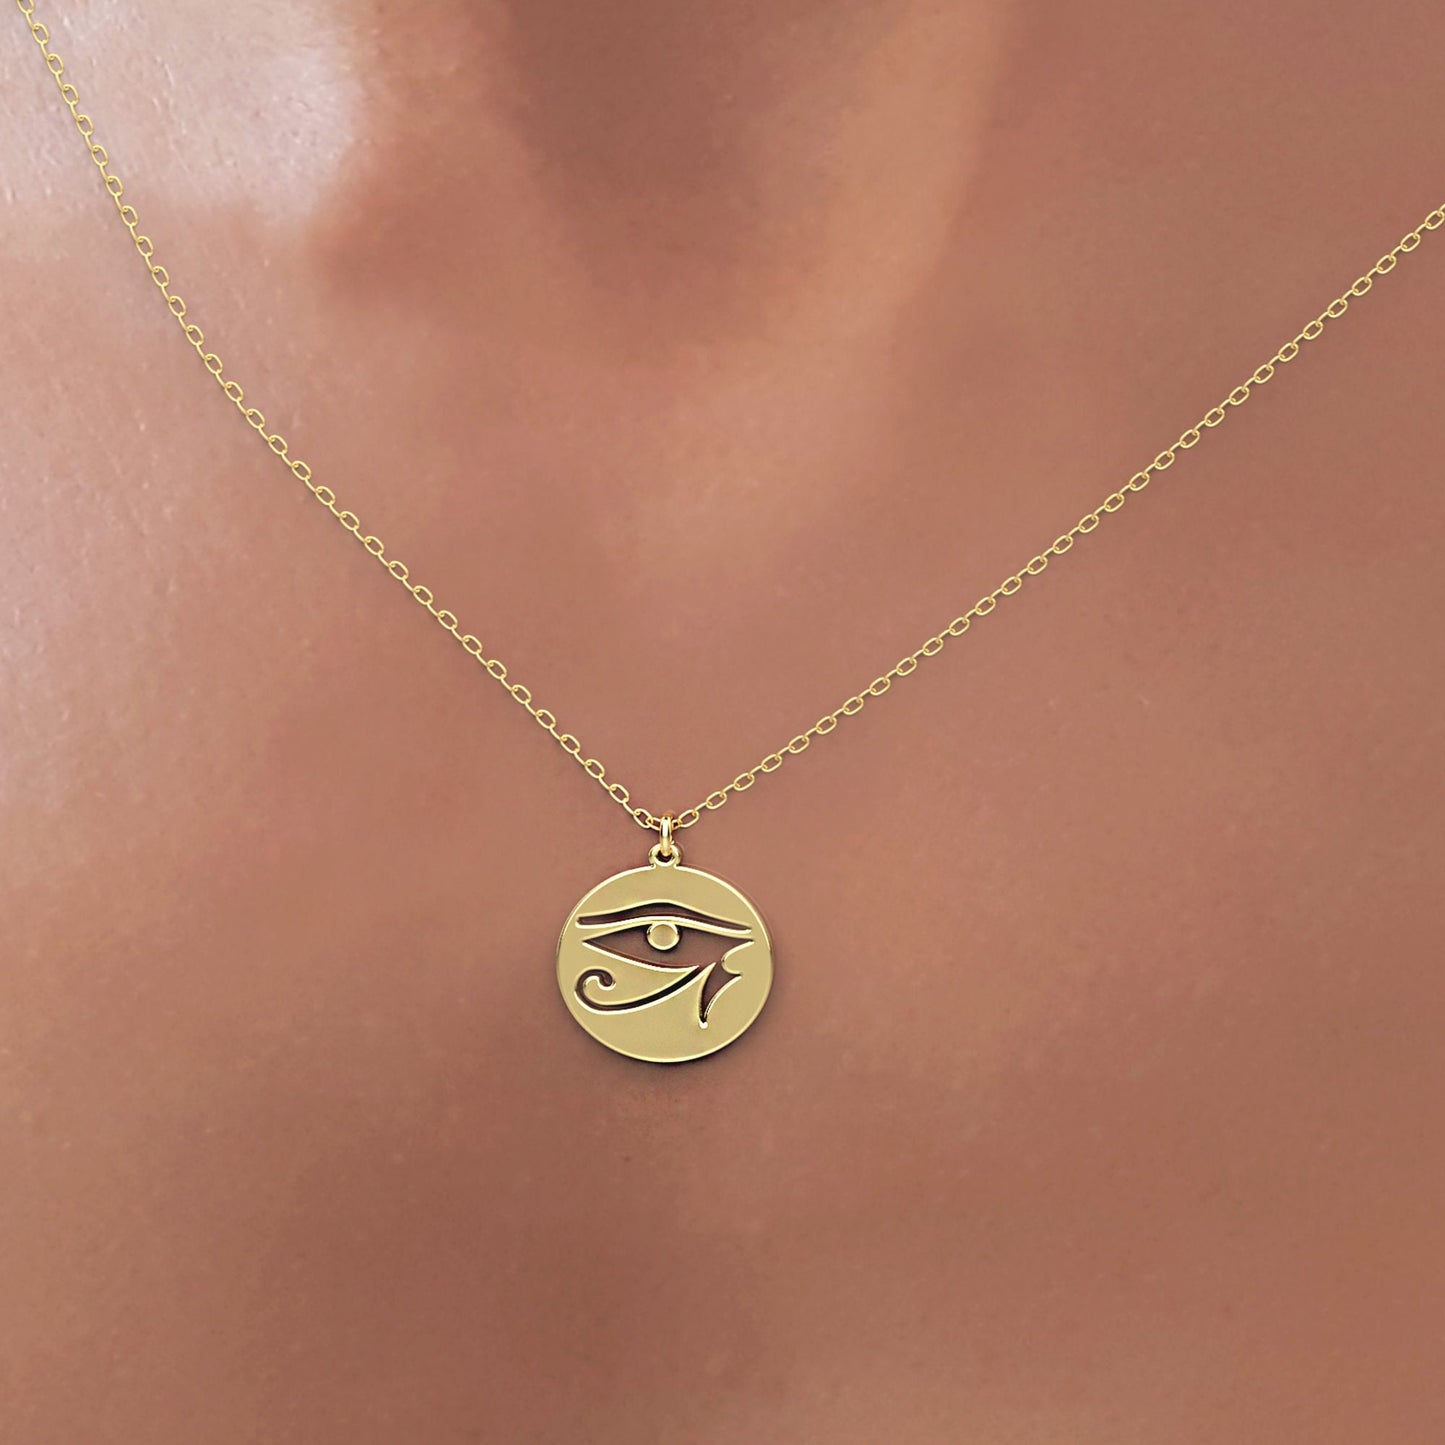 Eye of Ra chunky gold necklace, Eye of horus spiritual necklace, Evil eye necklace, Egyptian necklace, 14k chain necklace Goddess pendant